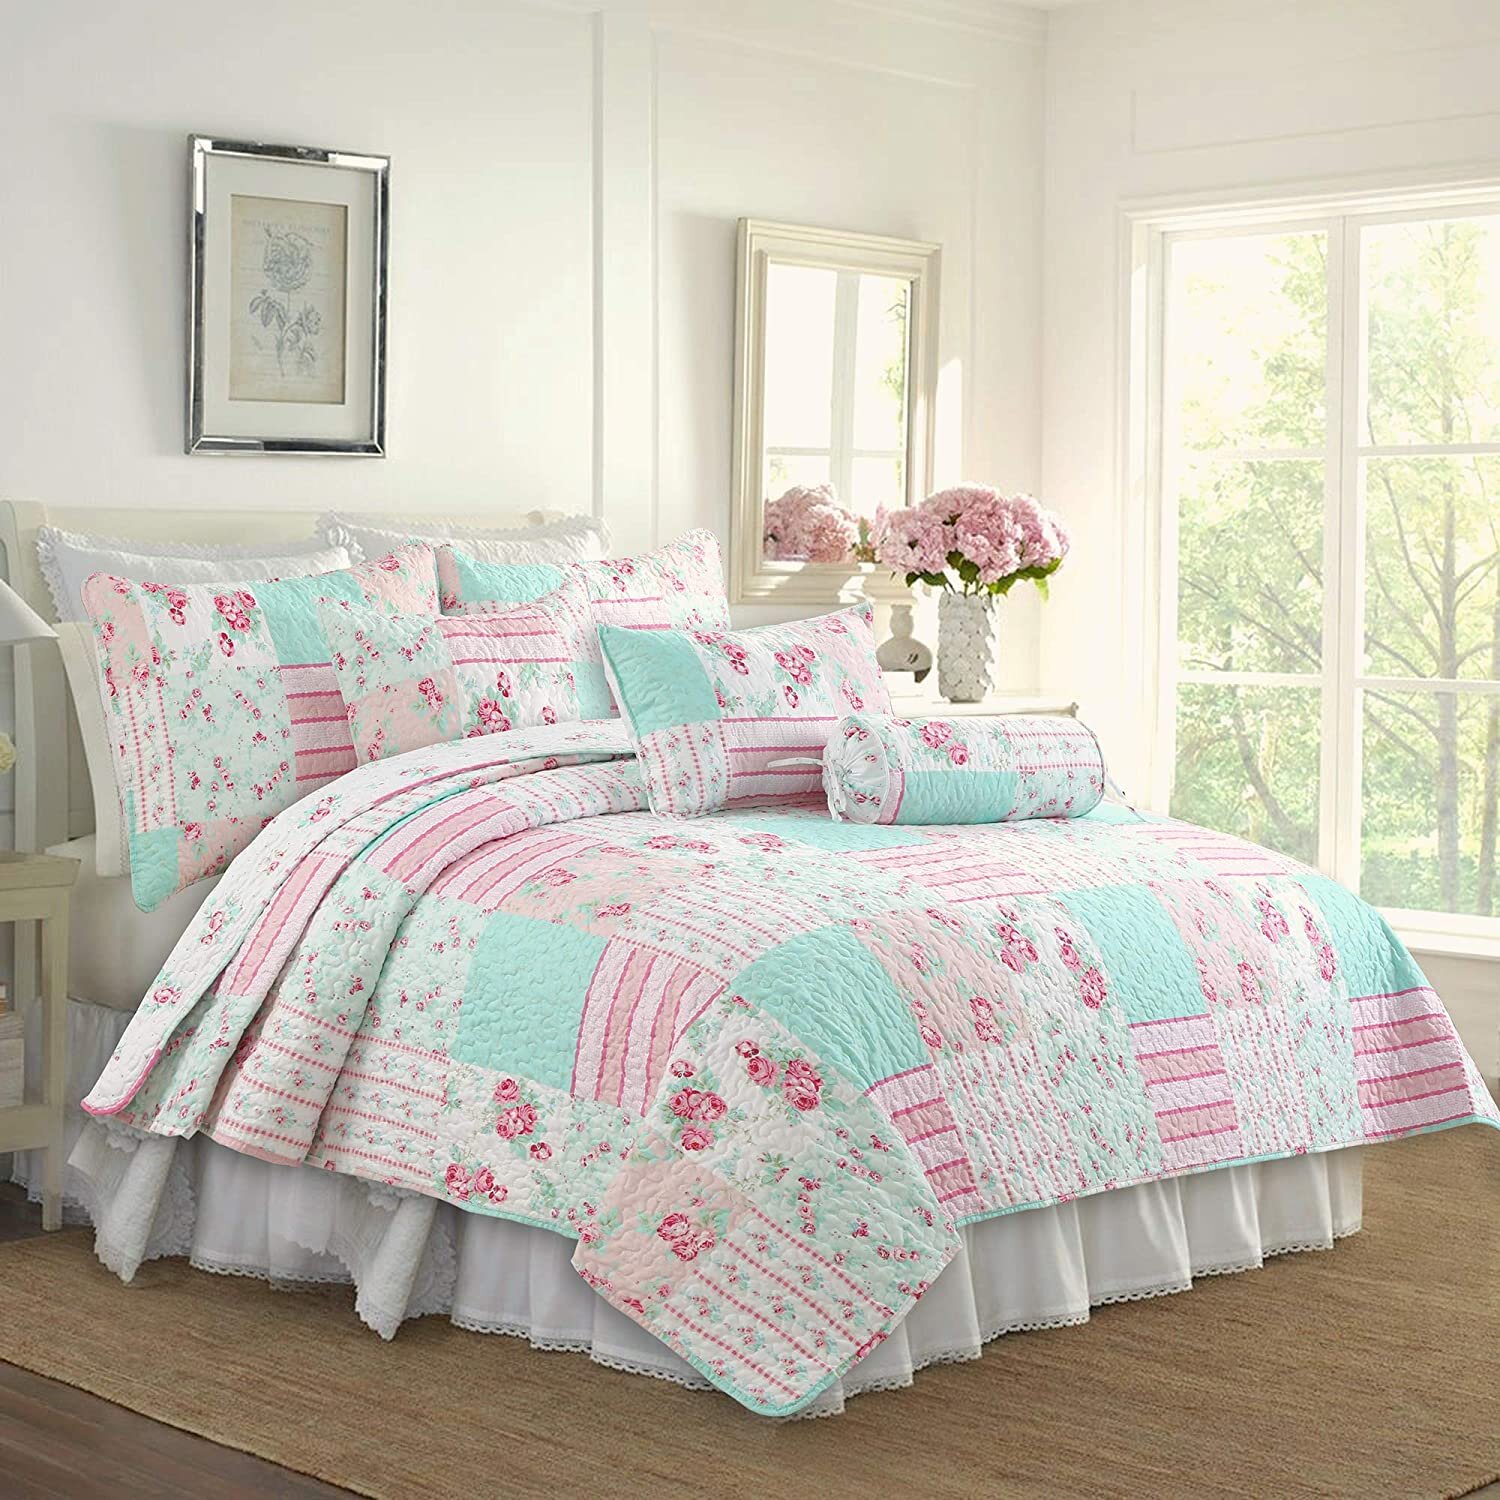 Rose Floral Patchwork Quilt Cover Set Single Double Bedding Bed Linen Blue Pink 